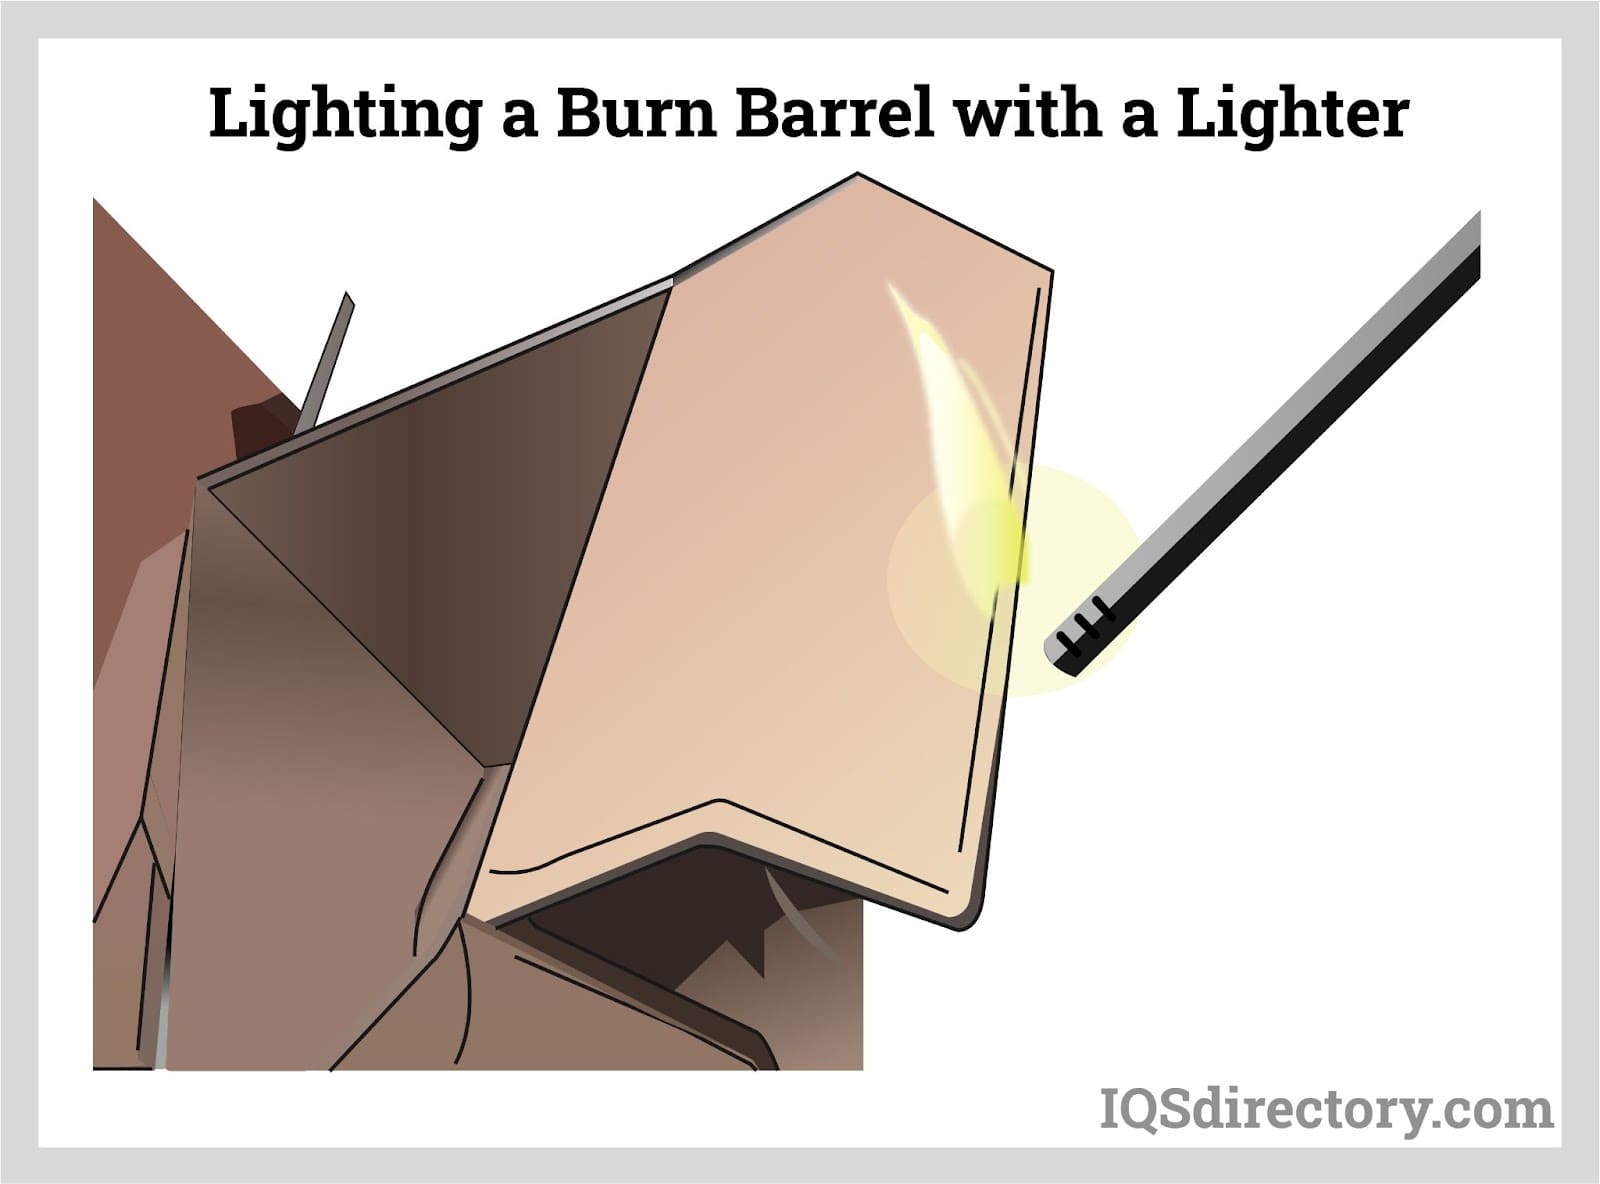 Lighting a Burn Barrel with a Lighter